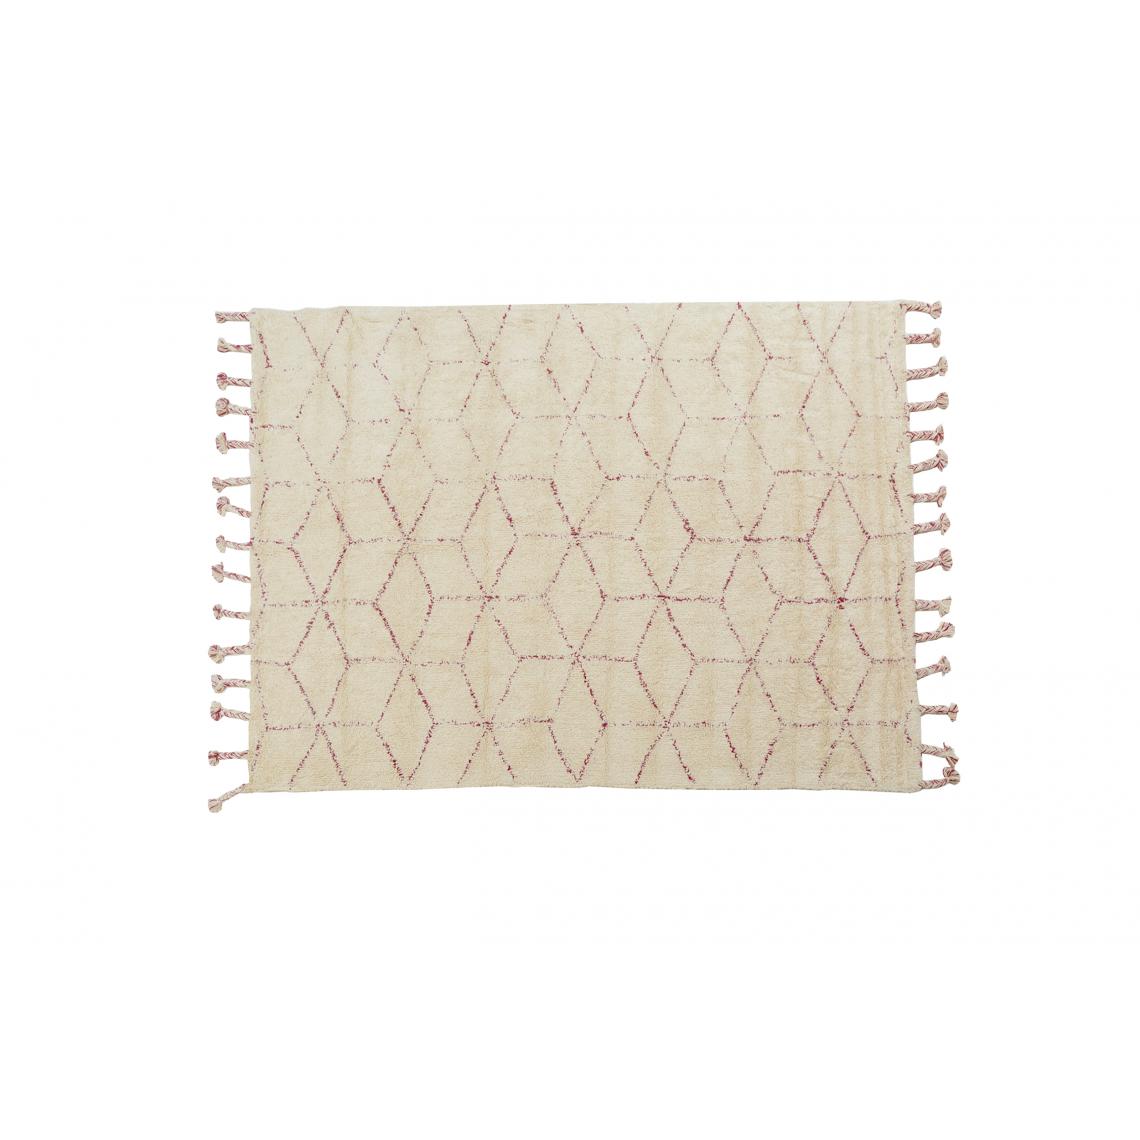 Alter - Tapis Californie moderne, style kilim, 100% coton, ivoire, 200x140cm - Tapis